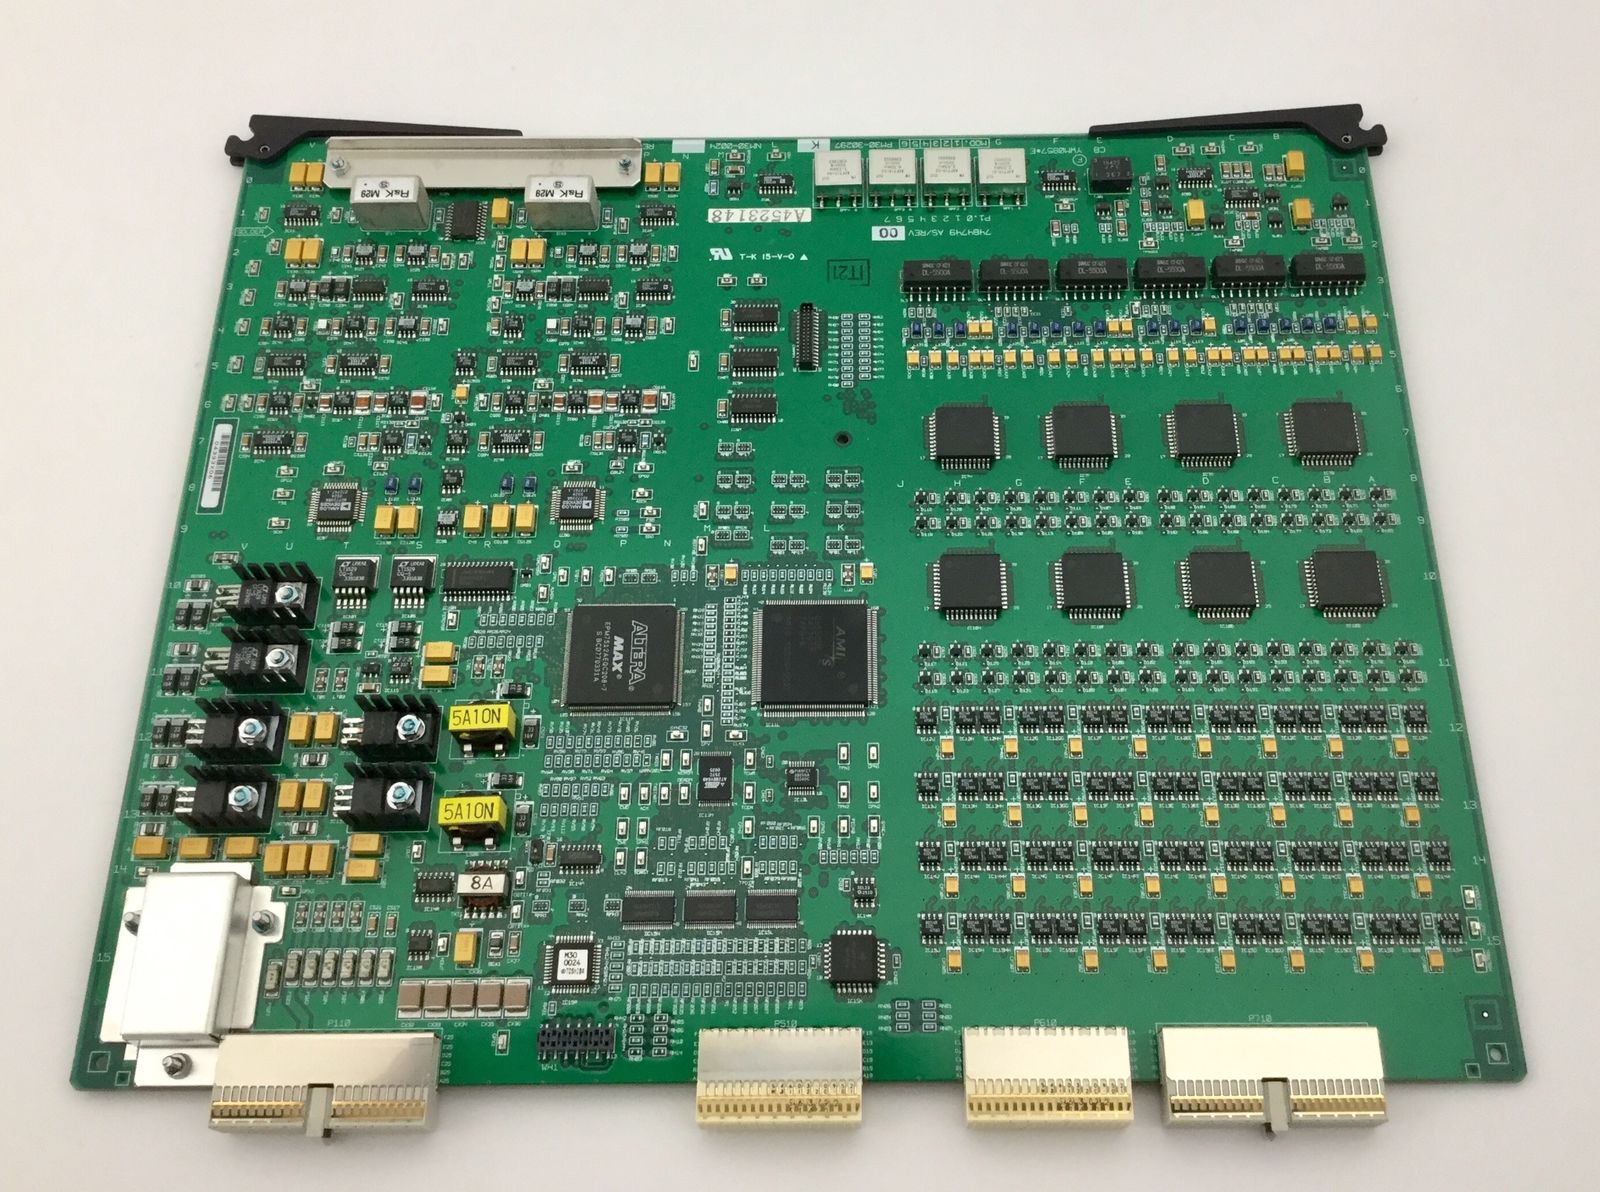 Toshiba SSA-770A Ultrasound 061-01576-0022 RM Board DIAGNOSTIC ULTRASOUND MACHINES FOR SALE